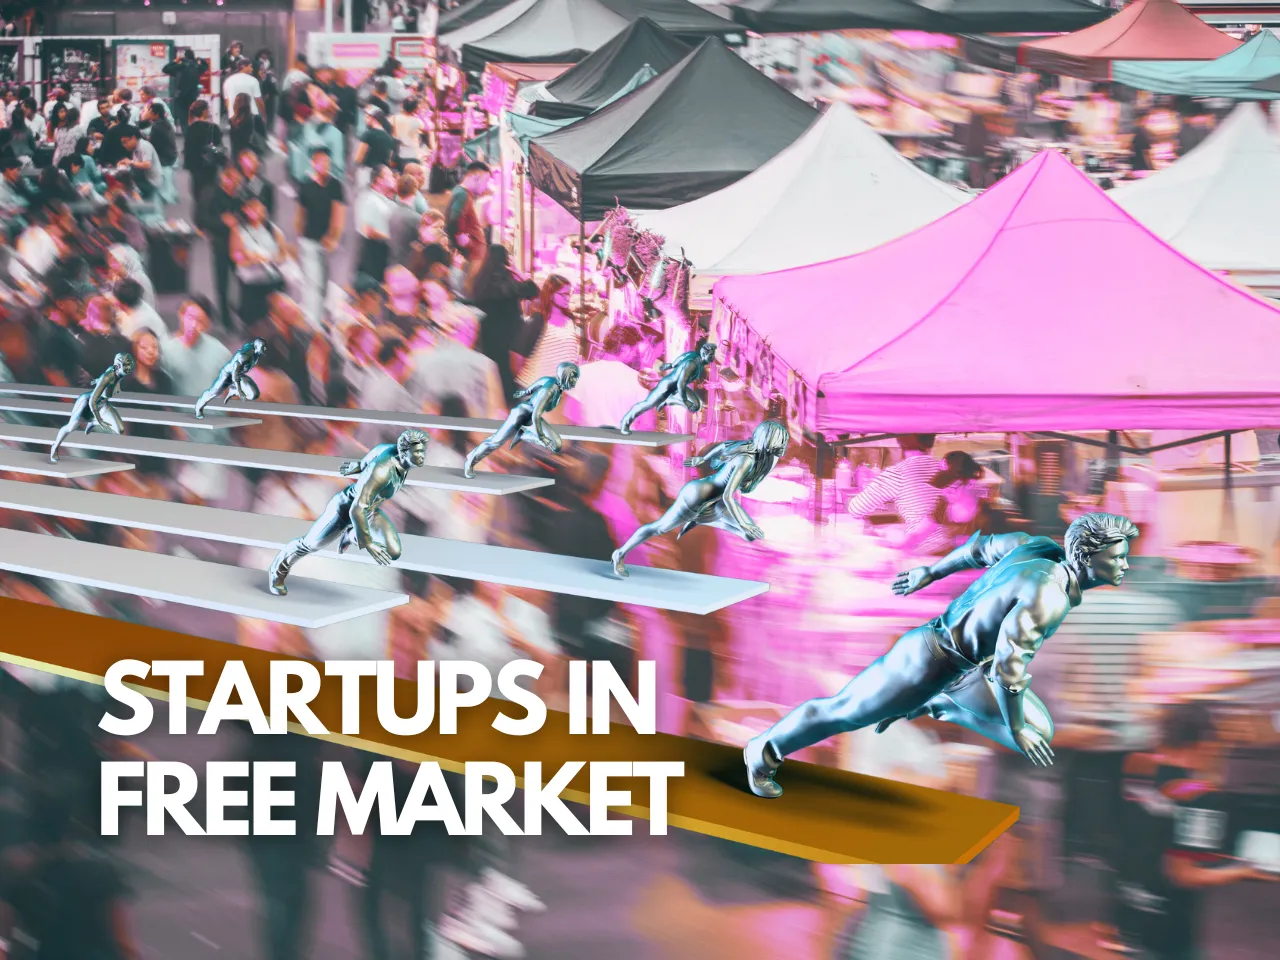 Startup in free market